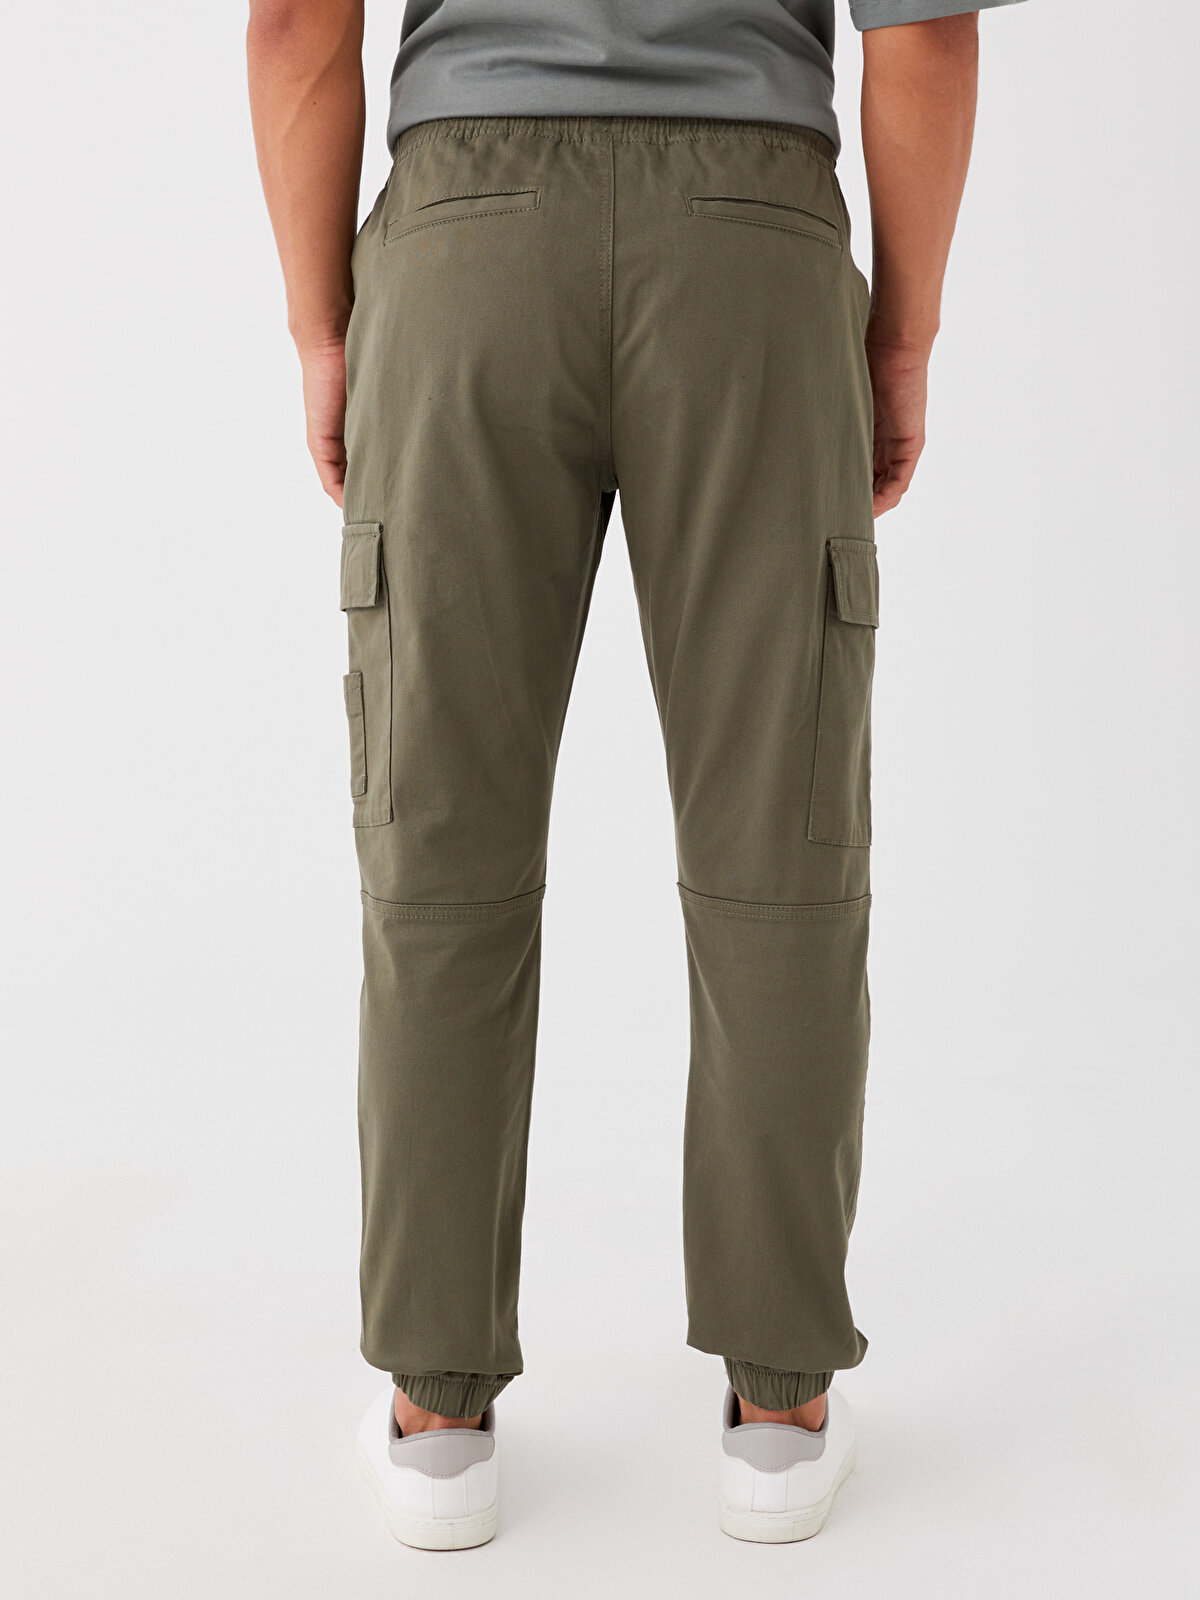 Buy Mens Cargos & Custom Made Cargo Pants For Men - Apella